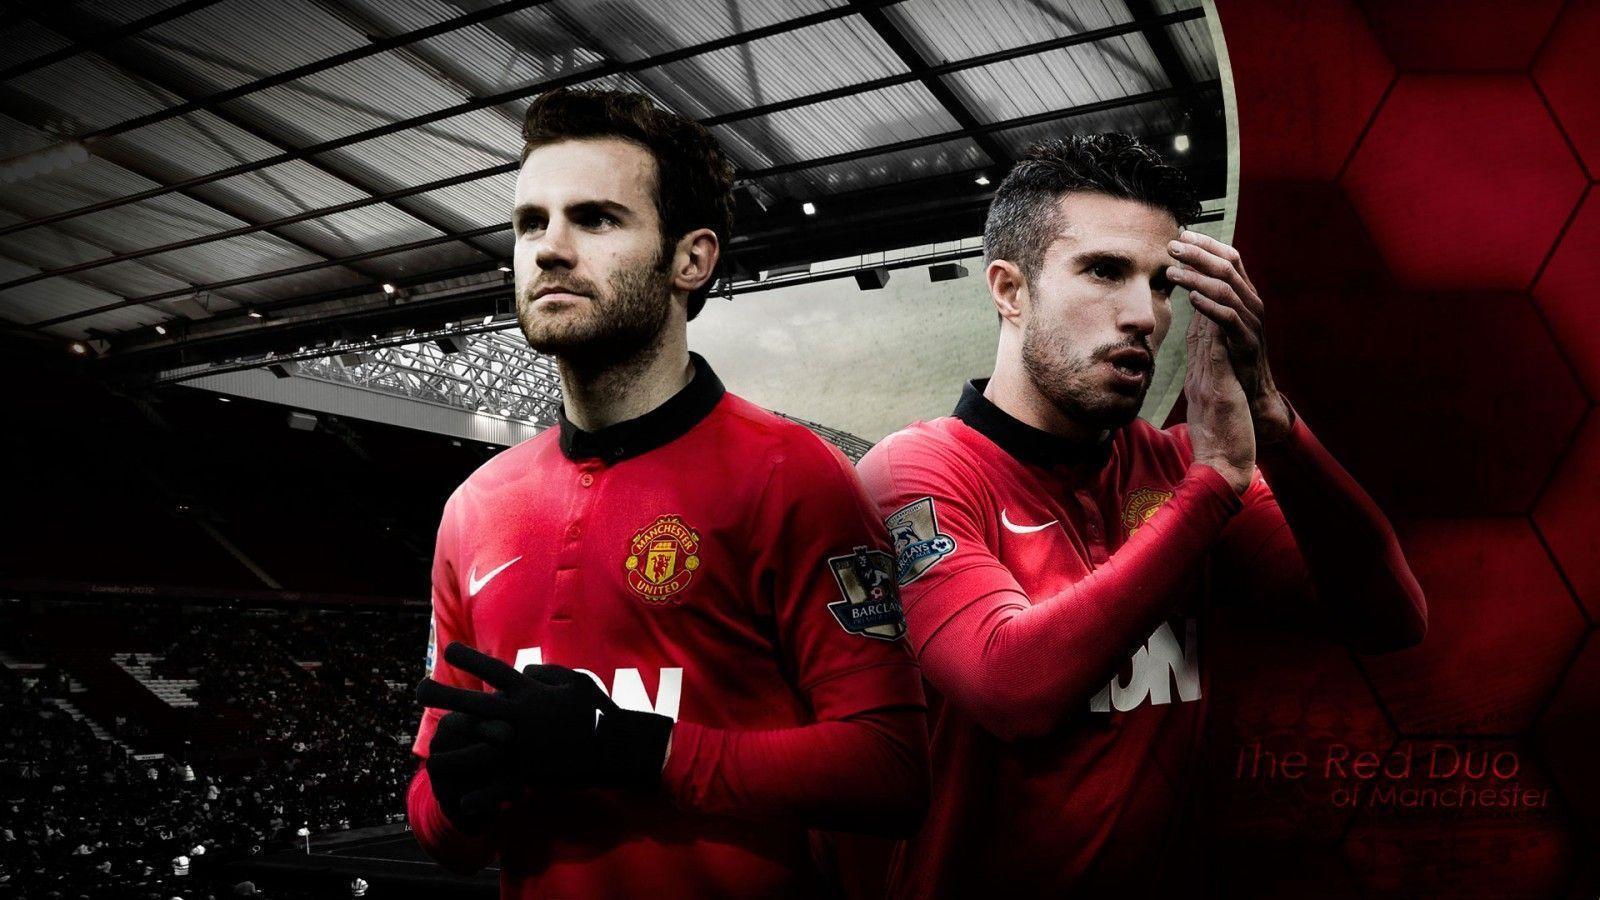 Manchester United Wallpaper HD 2015